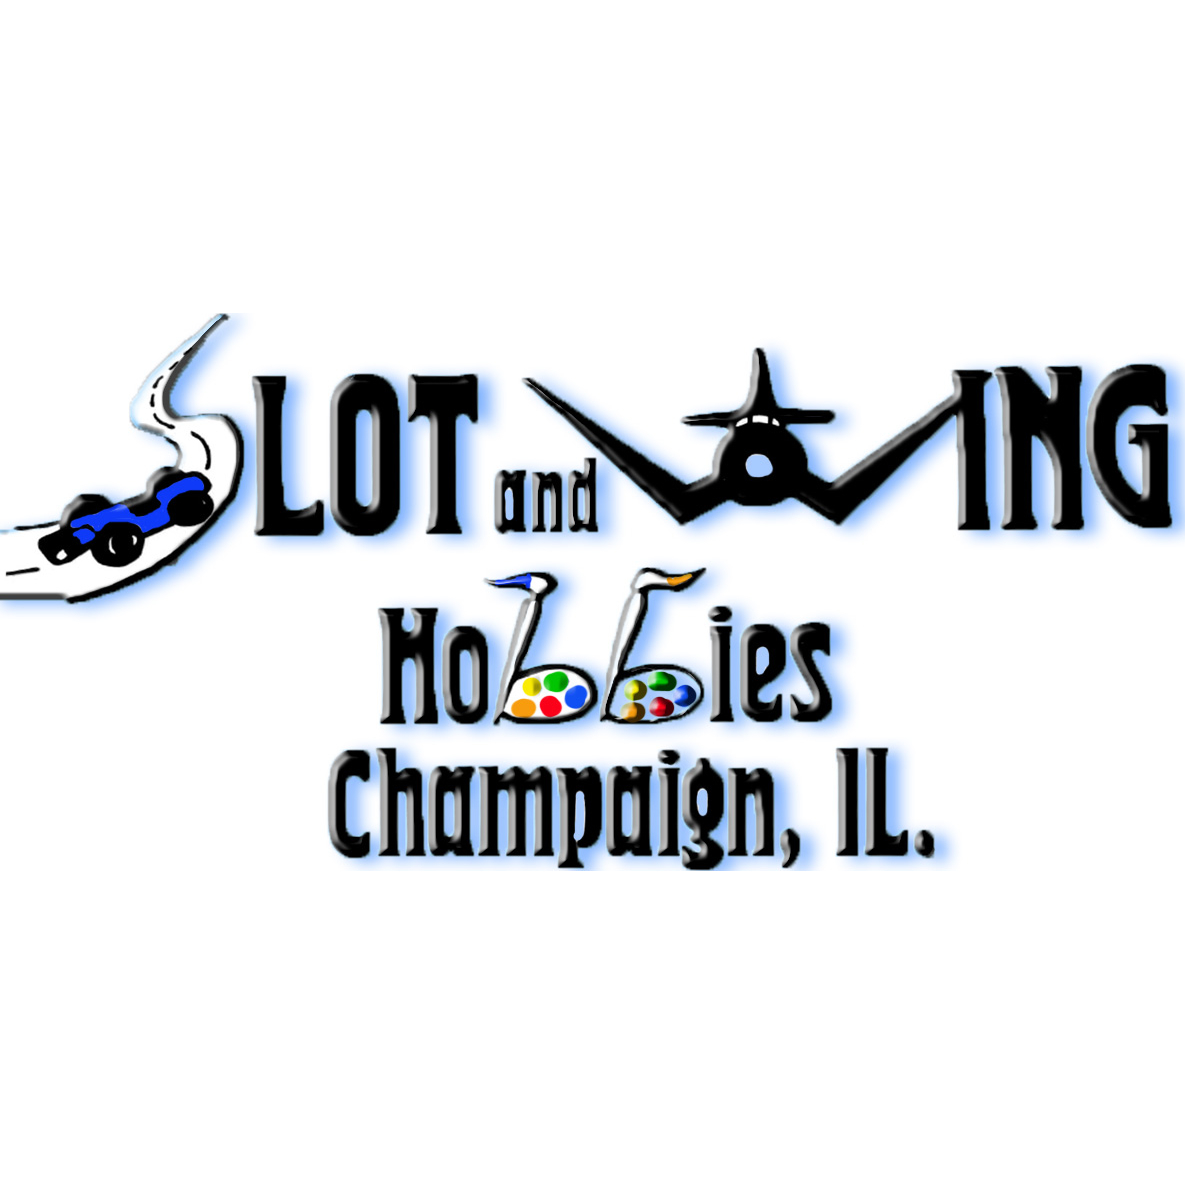 Slot & Wing Hobbies - Champaign, IL 61821 - (217)359-1909 | ShowMeLocal.com